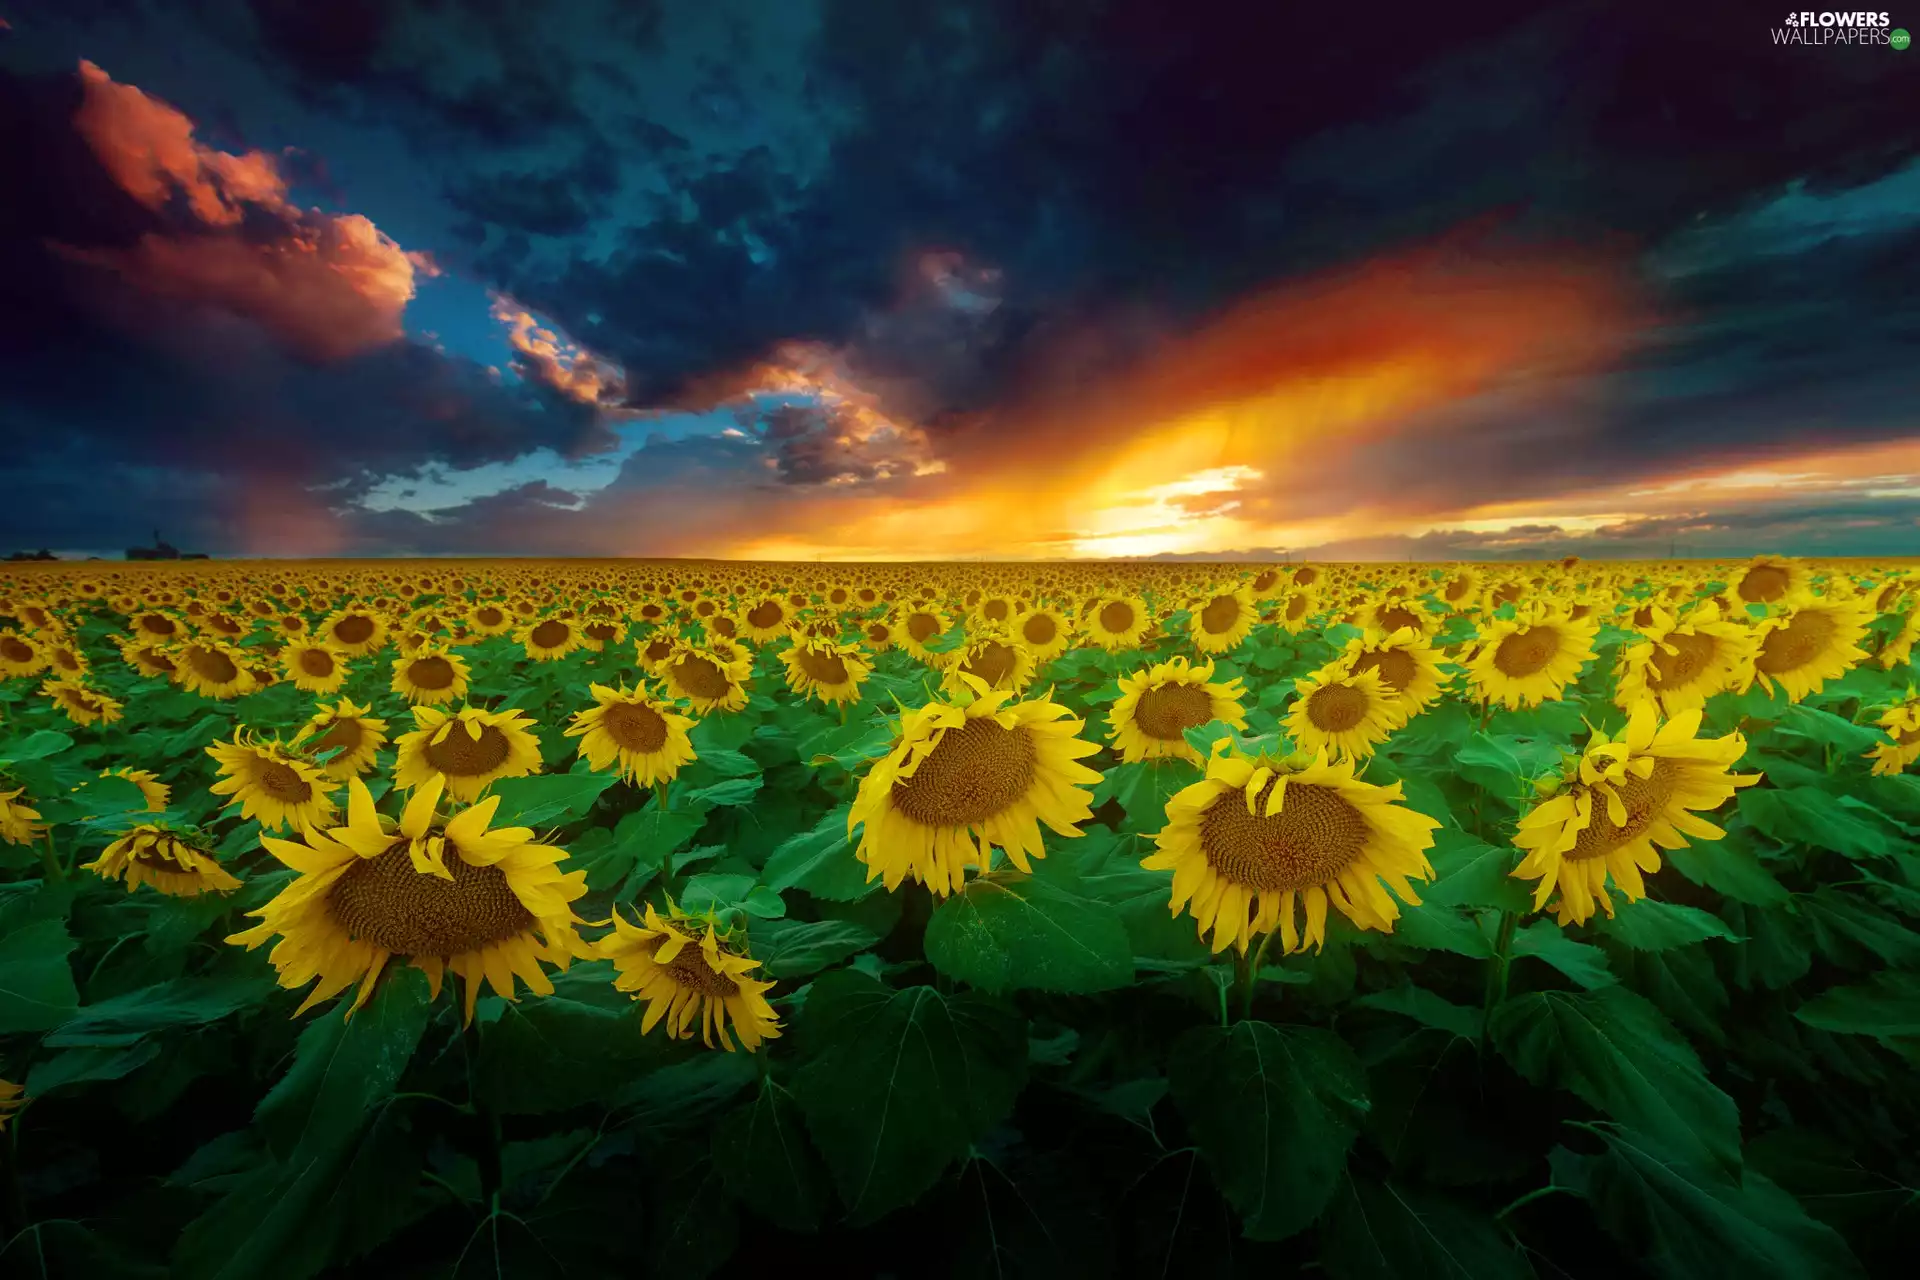 Great Sunsets, Nice sunflowers